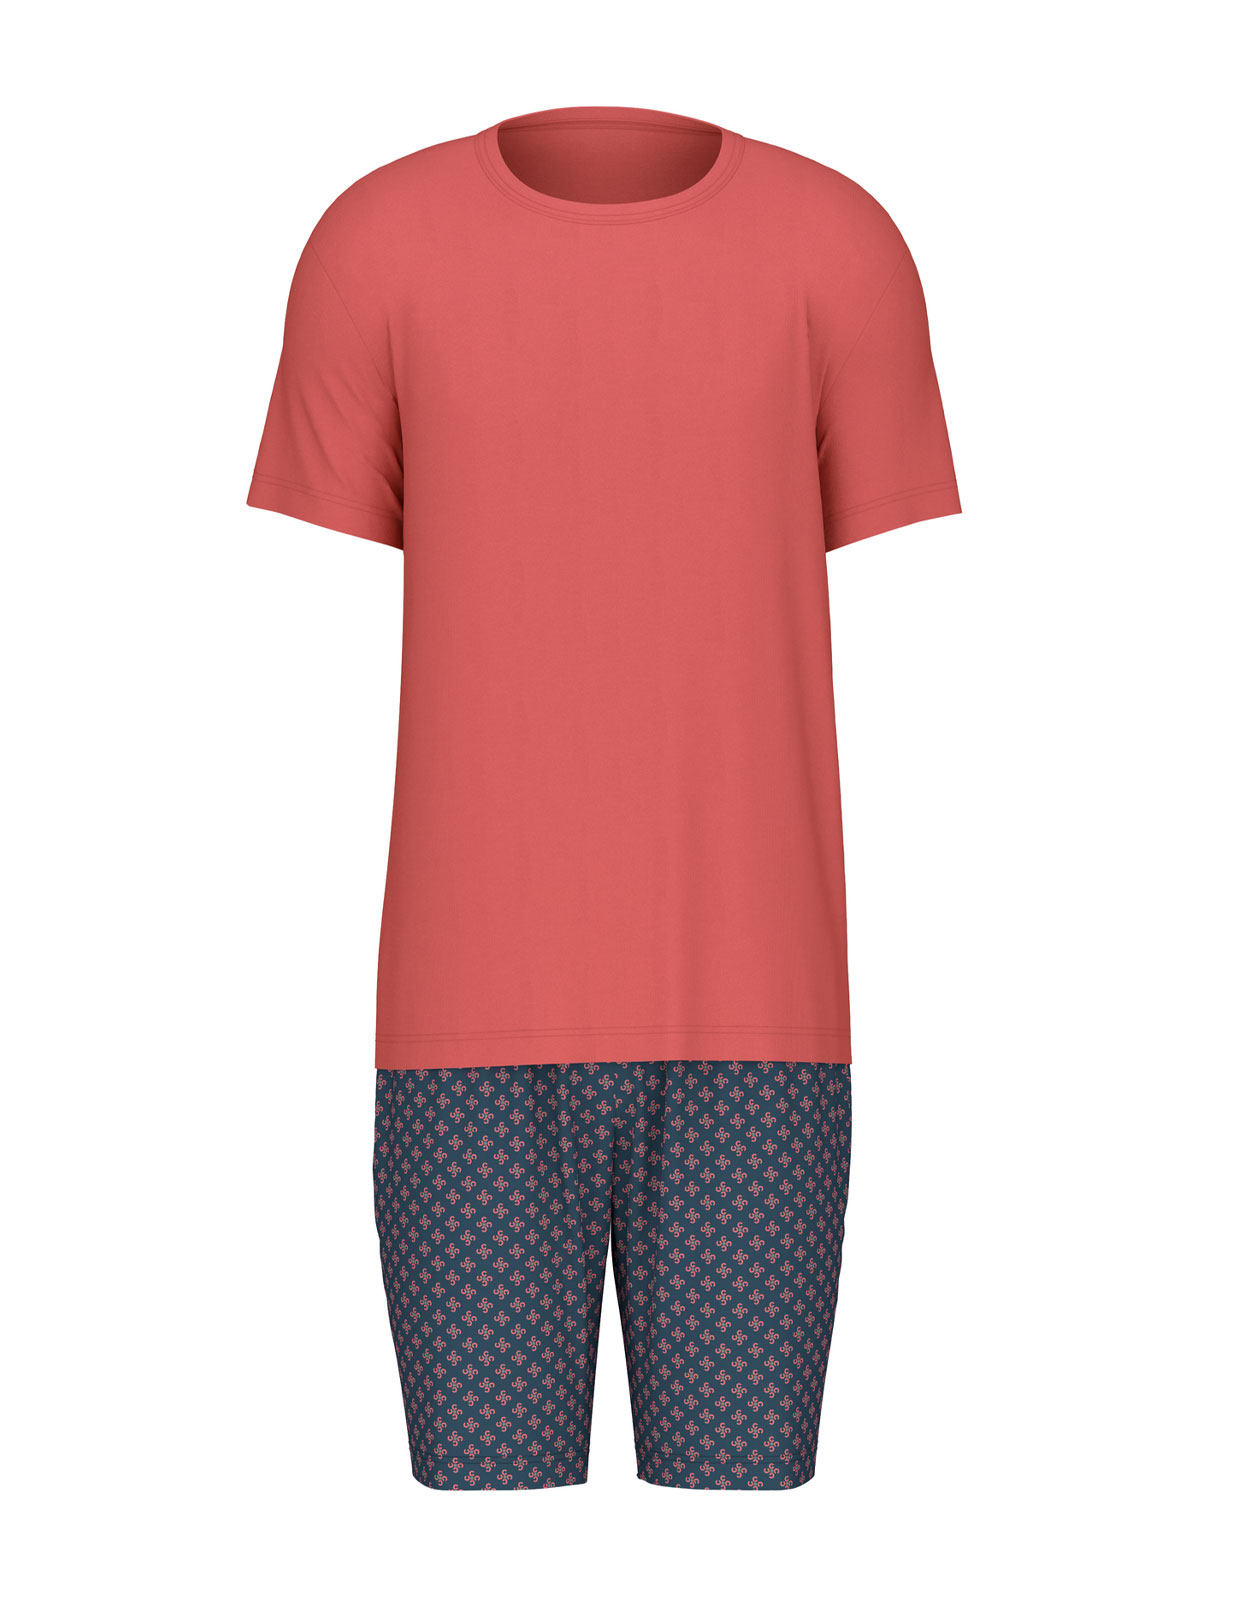 Pyjamas Röd/Blå Stl XL